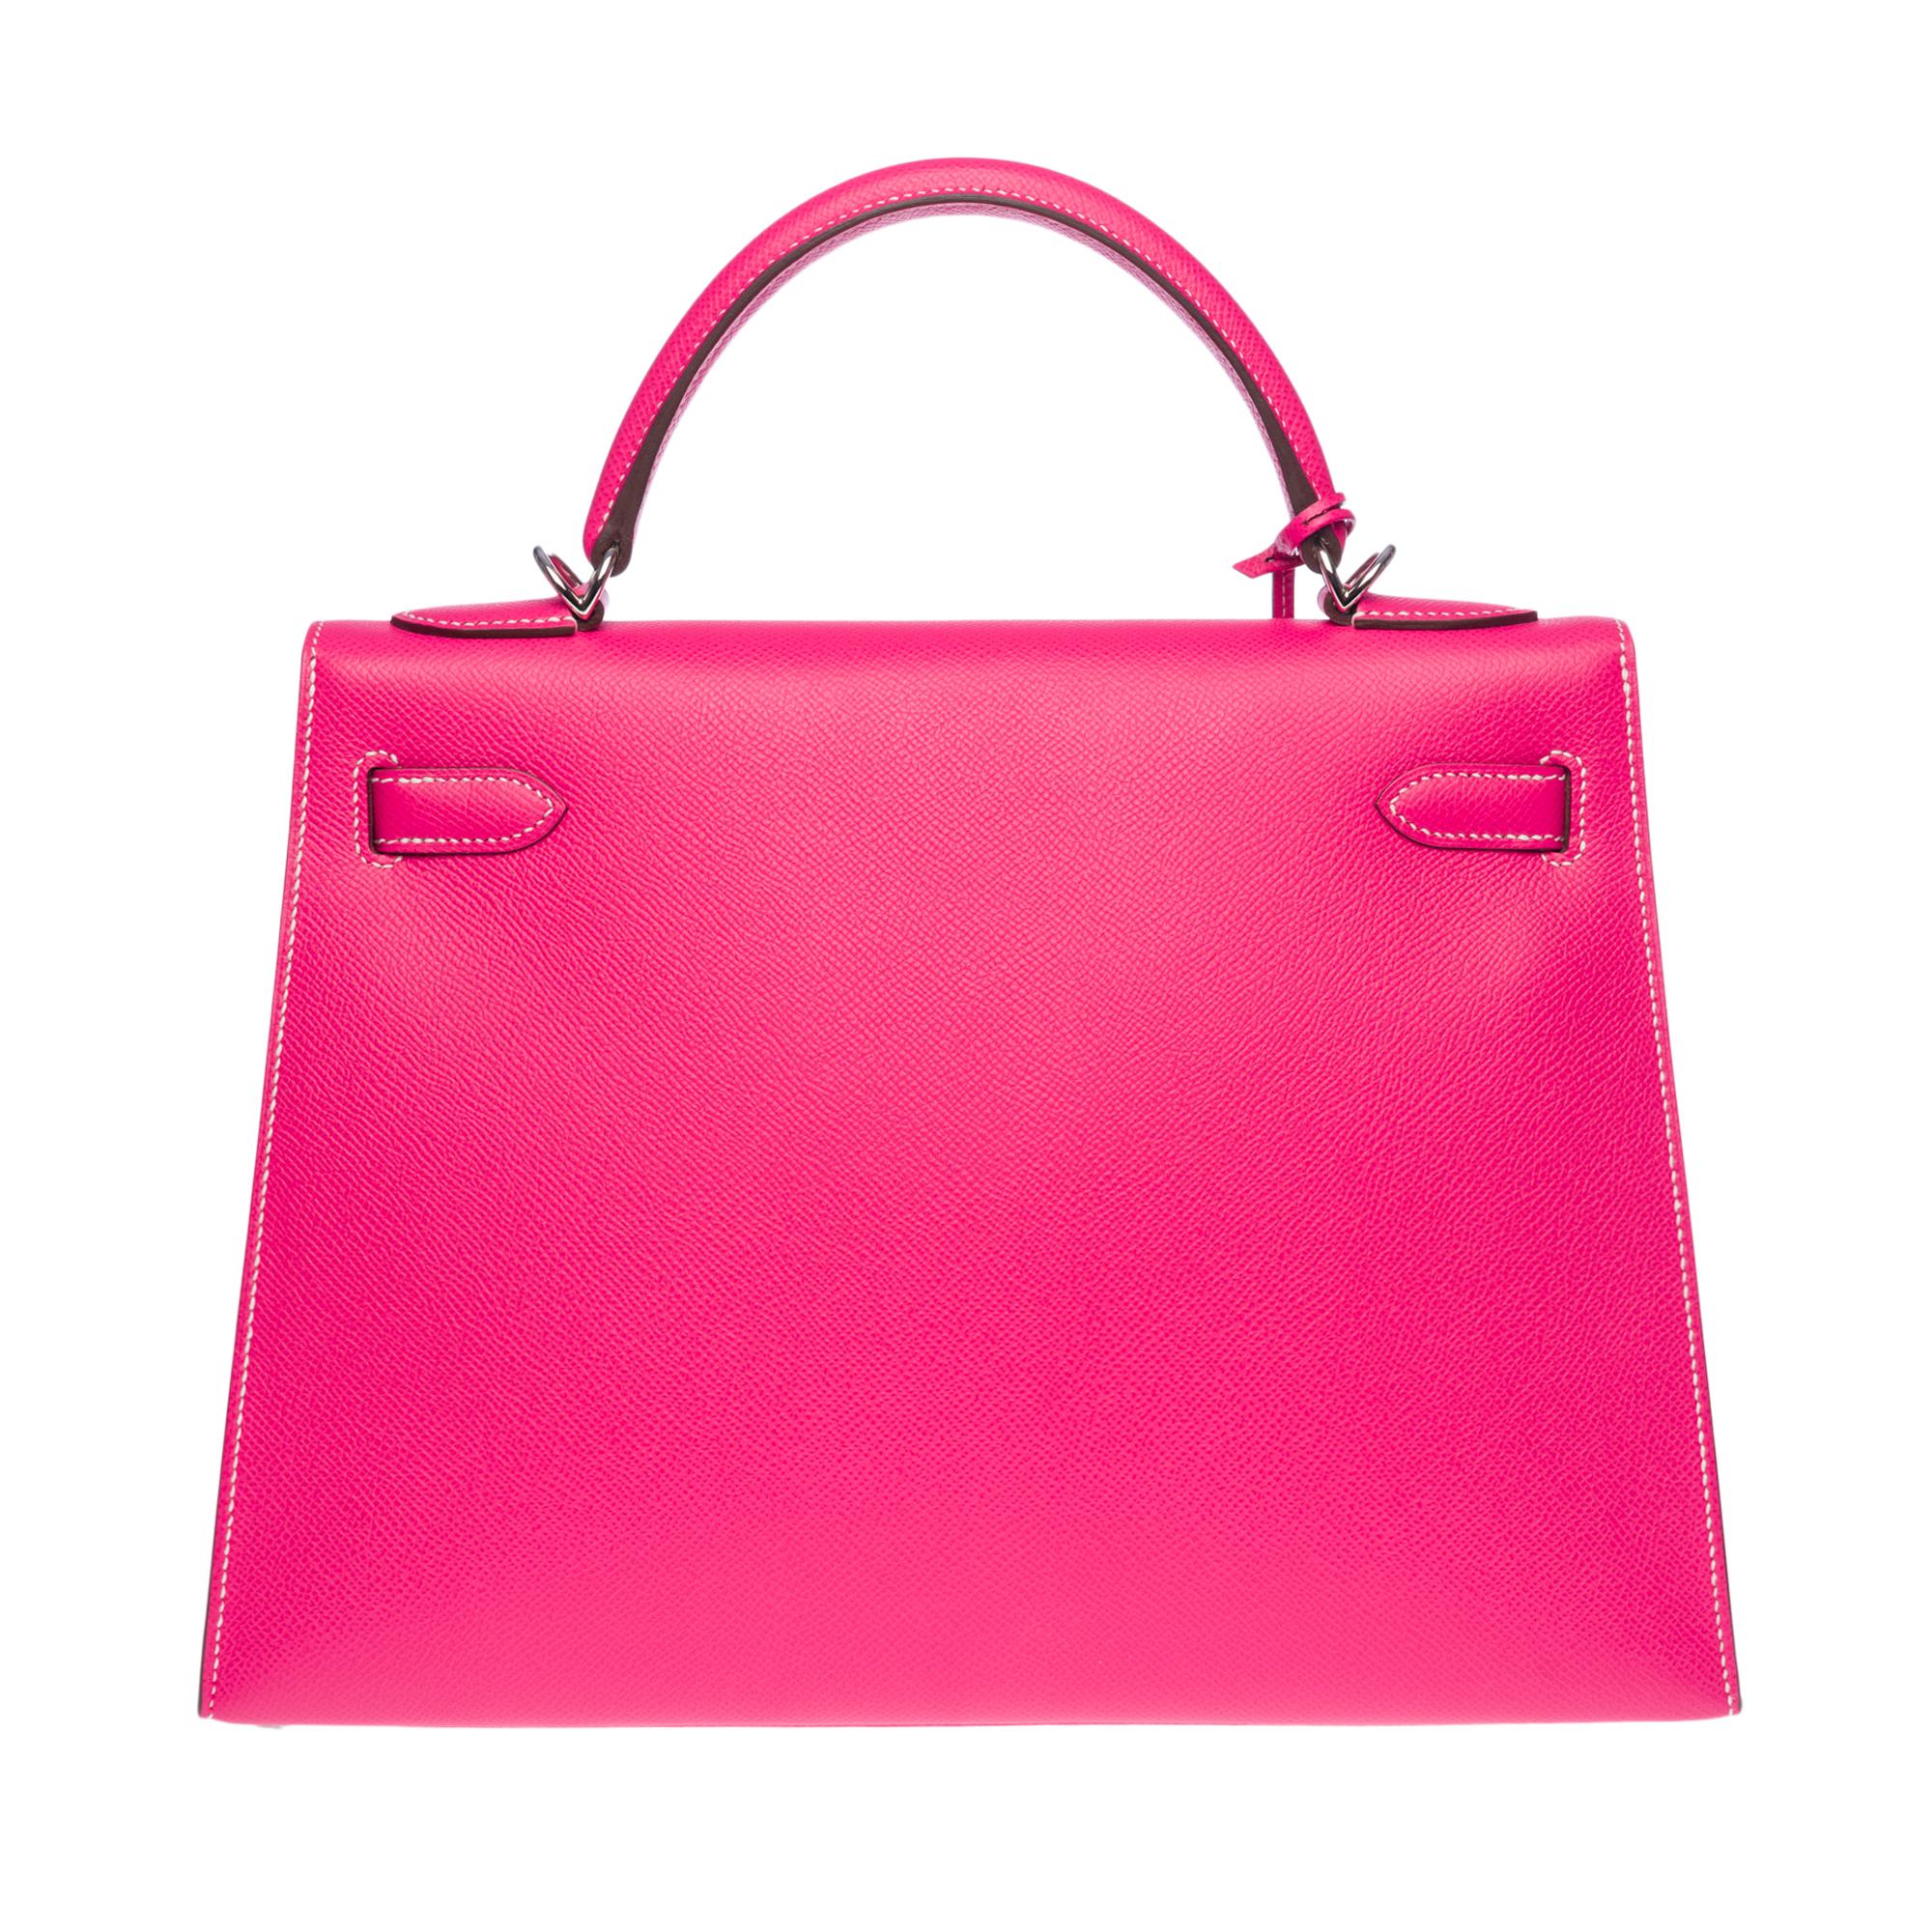 Red Hermès Kelly 32 sellier handbag strap in Rose lipstick epsom leather, SHW